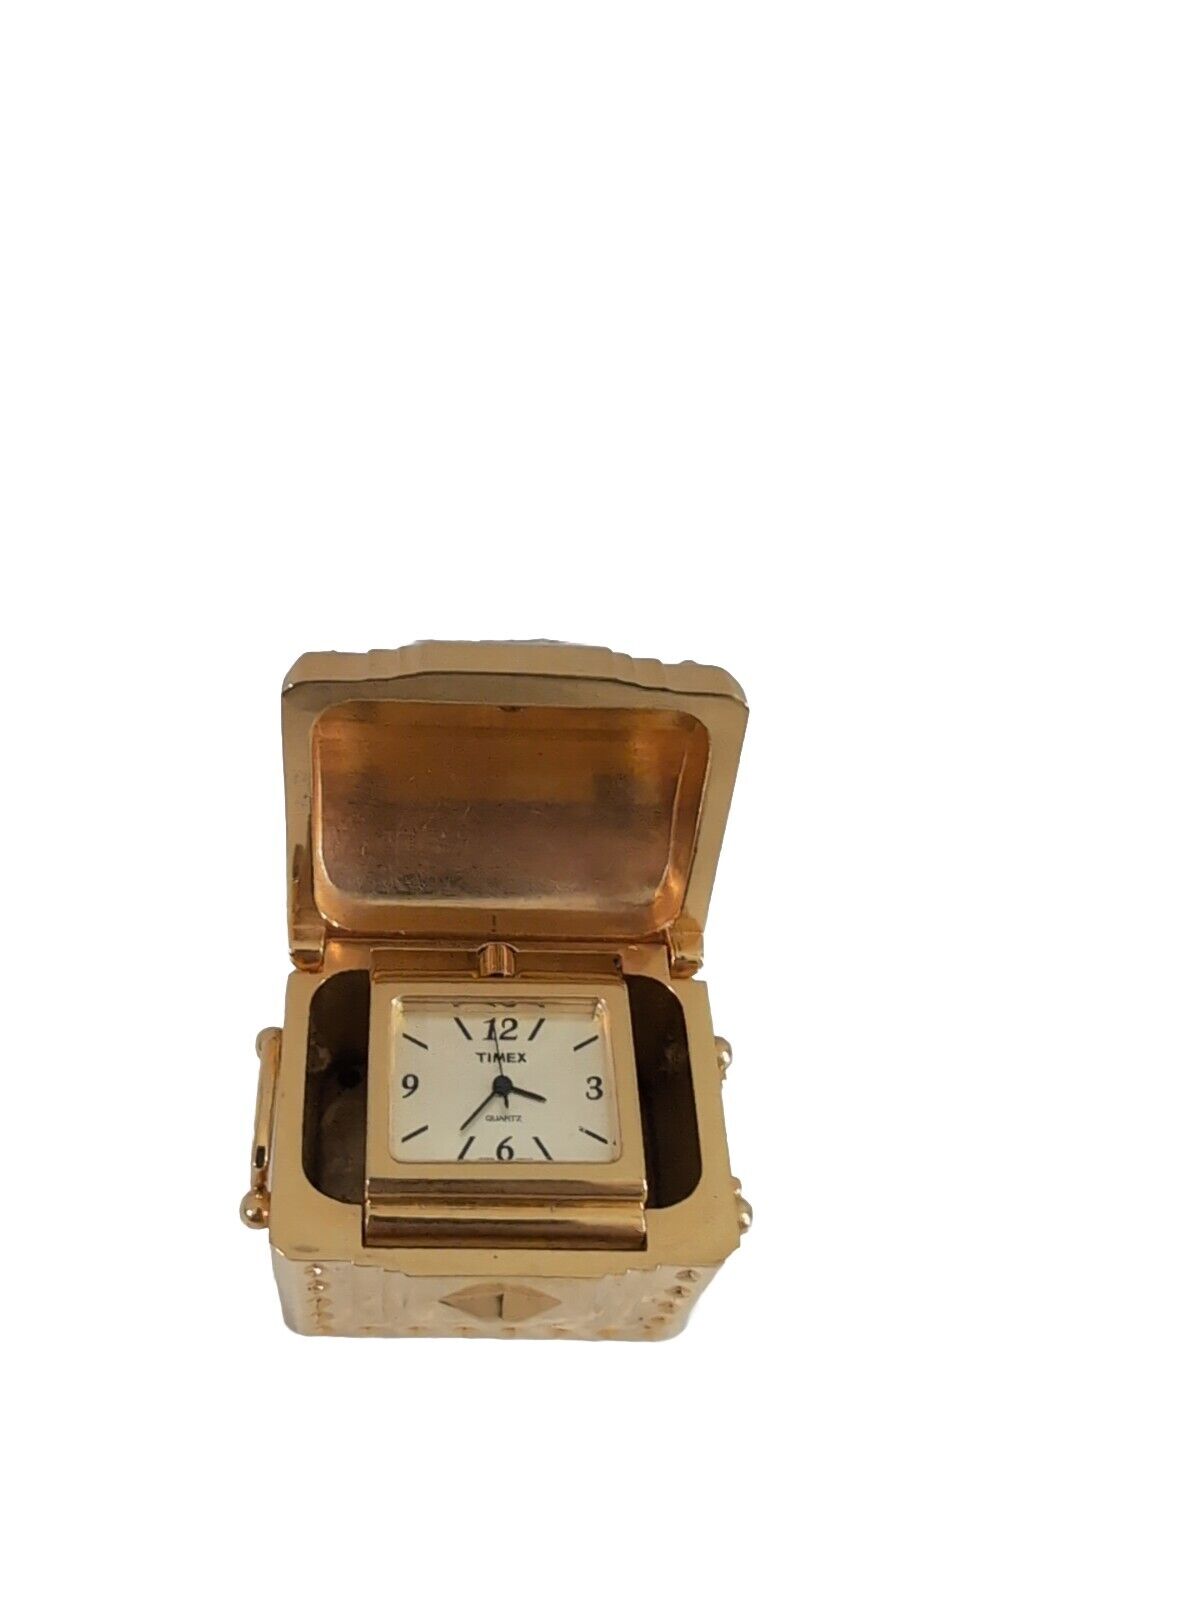 Timex Brass Mini Desk Clock Vintage Treasure Chest - NEW BATTERY